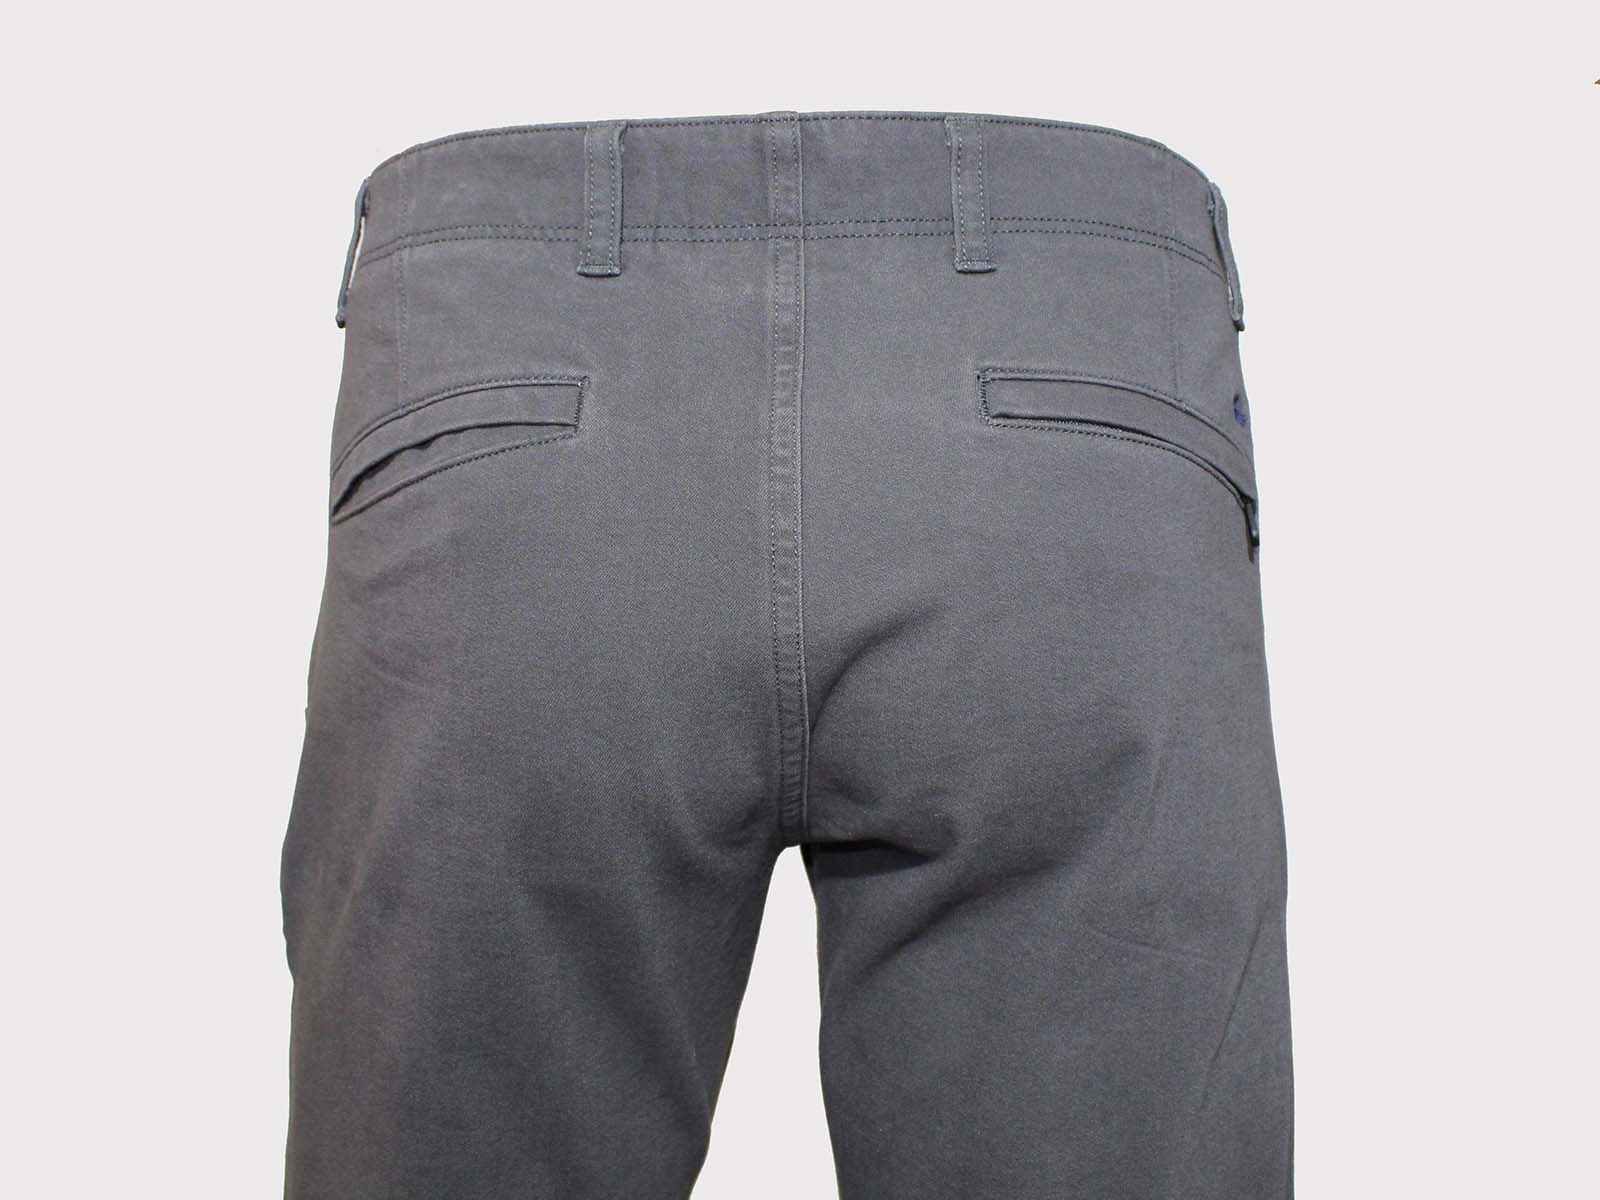 Pantalons d'home Dockers Alpha Khaki 360 slim (recte estret) 39900-0002 color gris - 3 - La Casa Dels Pantalons